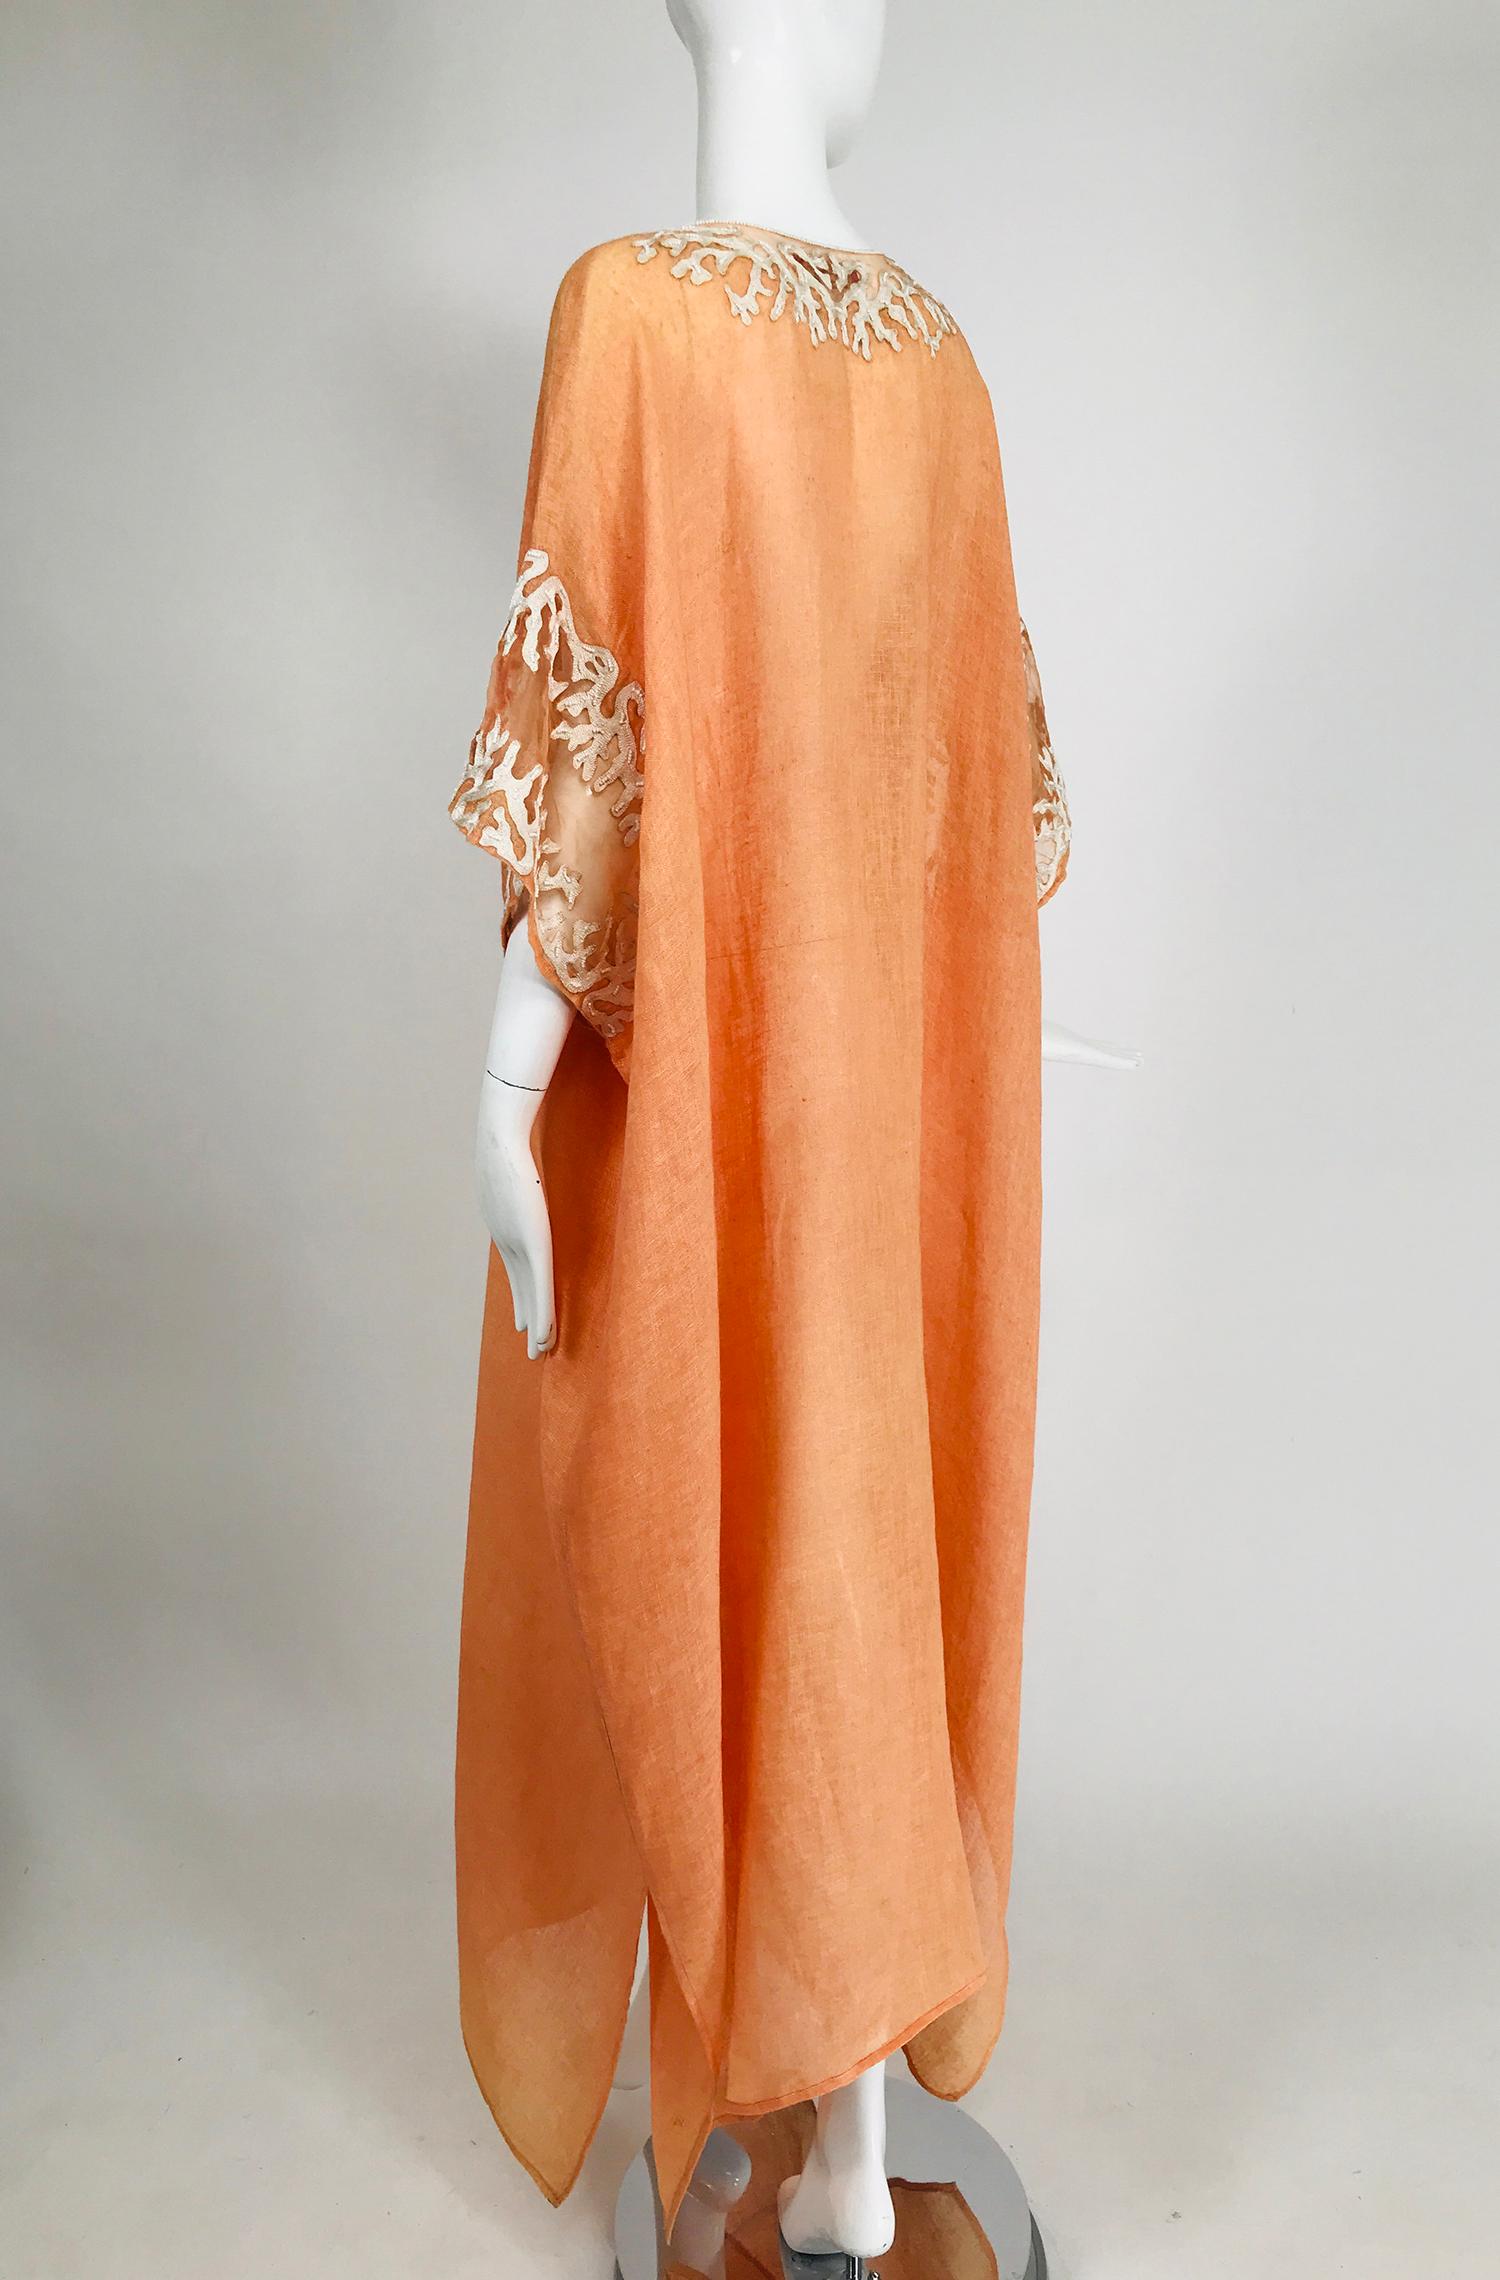 Women's or Men's Jeannie McQueeny Coral Linen Applique & Beaded Caftan 